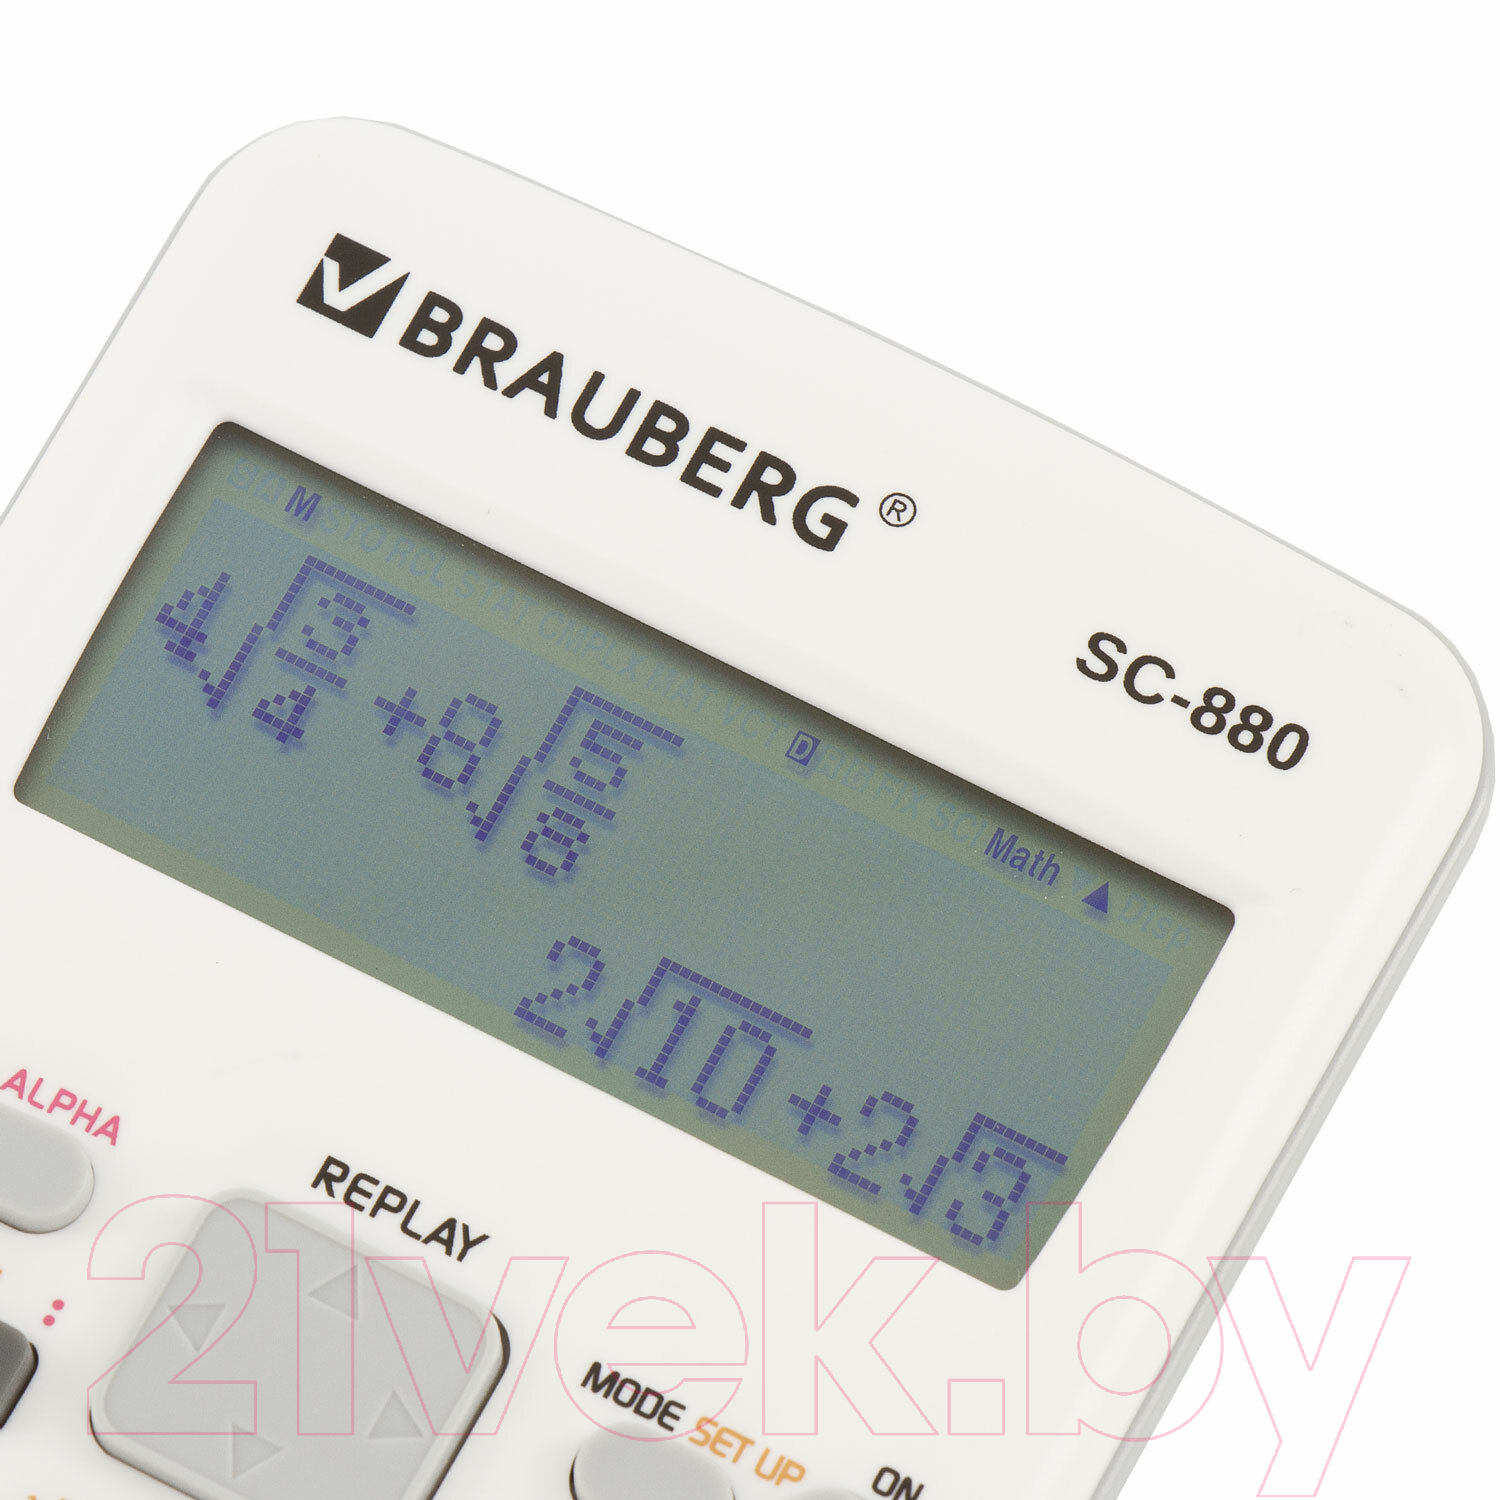 Калькулятор Brauberg SC-880-N 417 / 250526